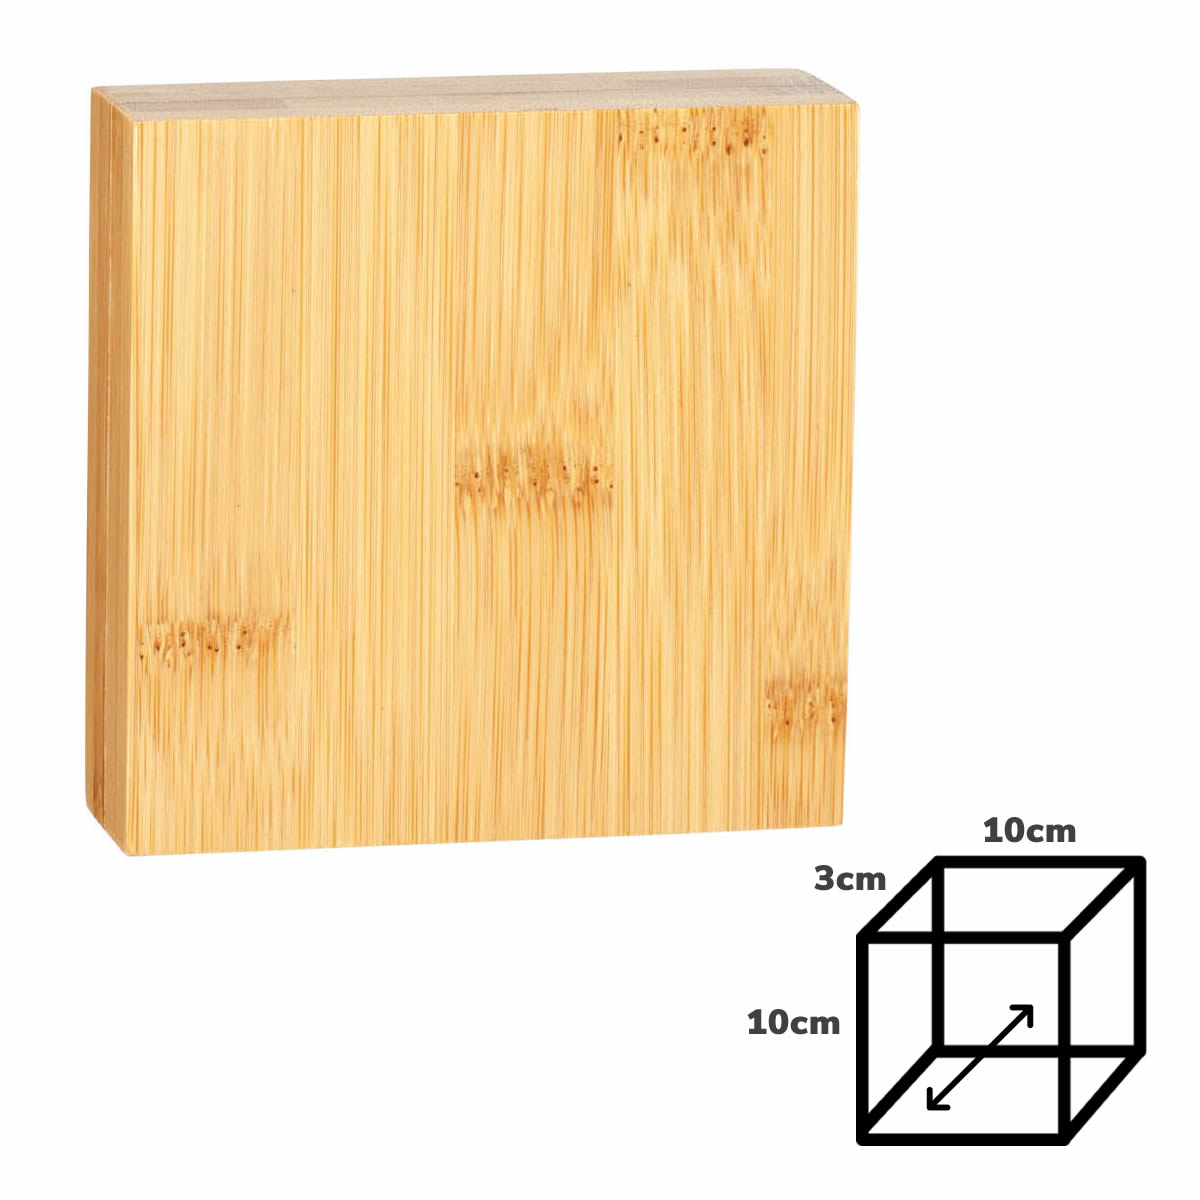 Bamboo Wooden Block Award - Small - Laser Engraved